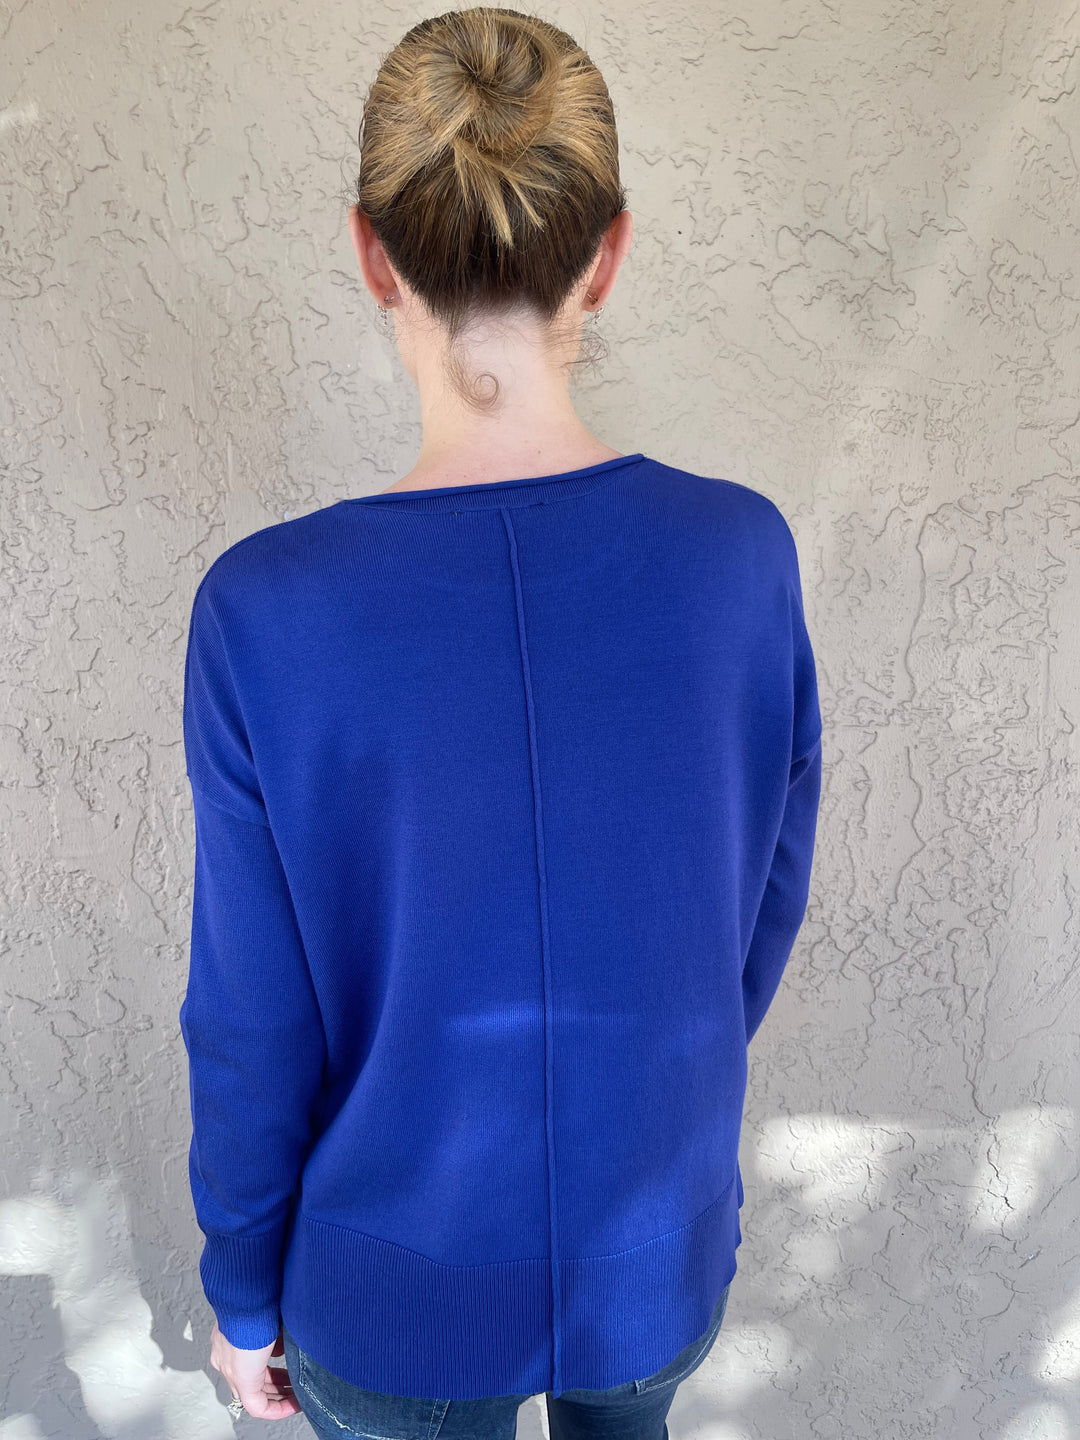 Center Seam Sweater - Galaxy Blue